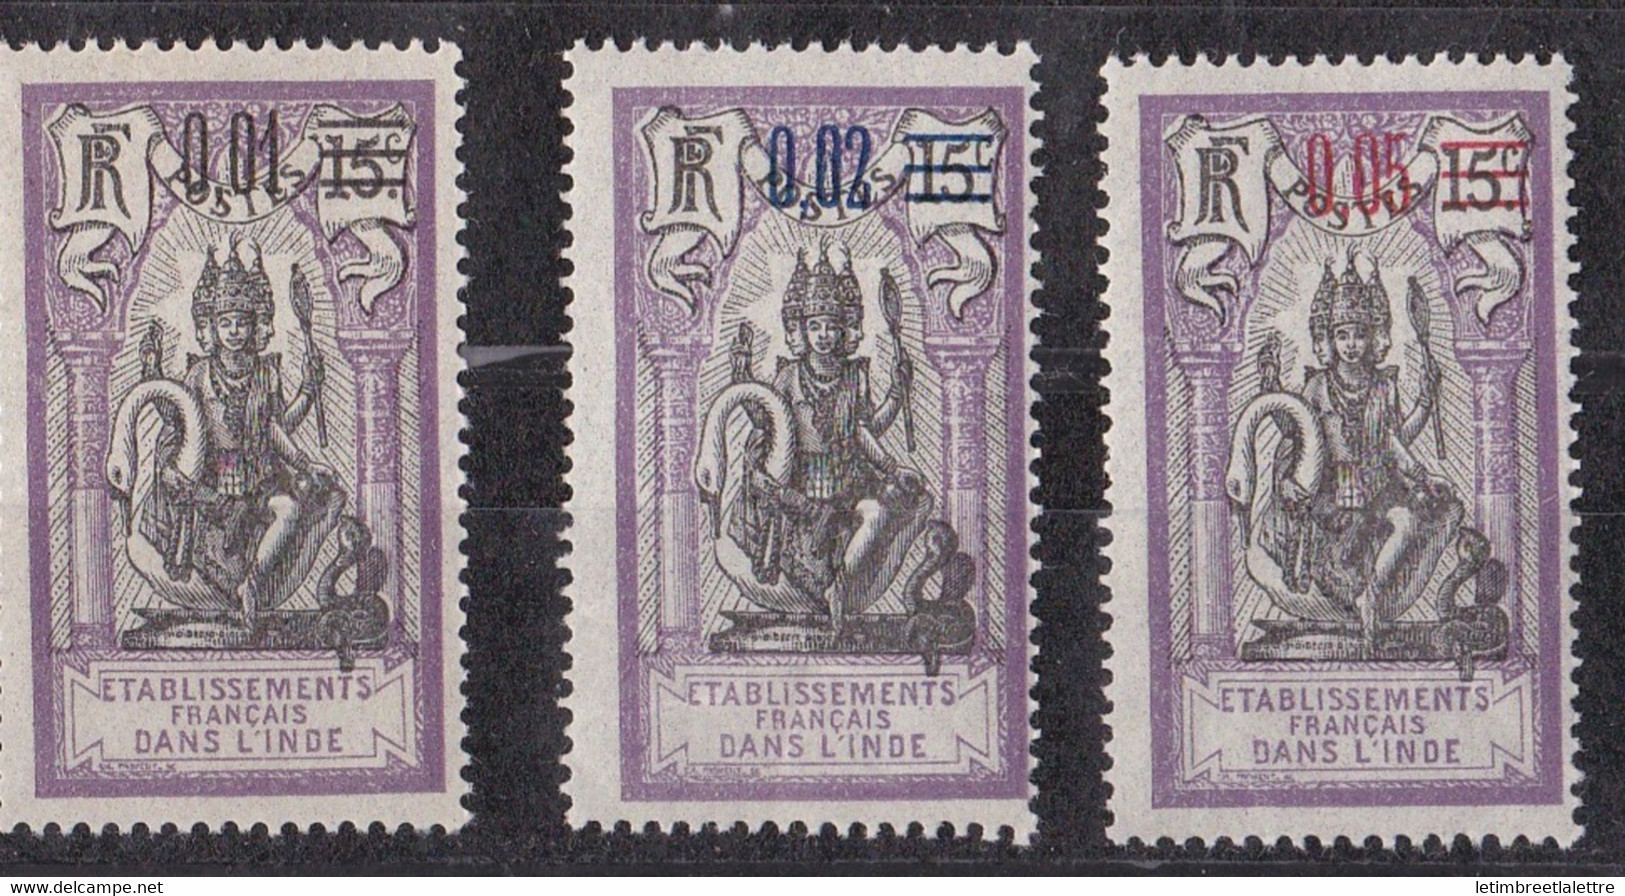 ⭐ Inde - YT N° 56 à 58 ** - Neuf Sans Charnière - 1922 ⭐ - Unused Stamps